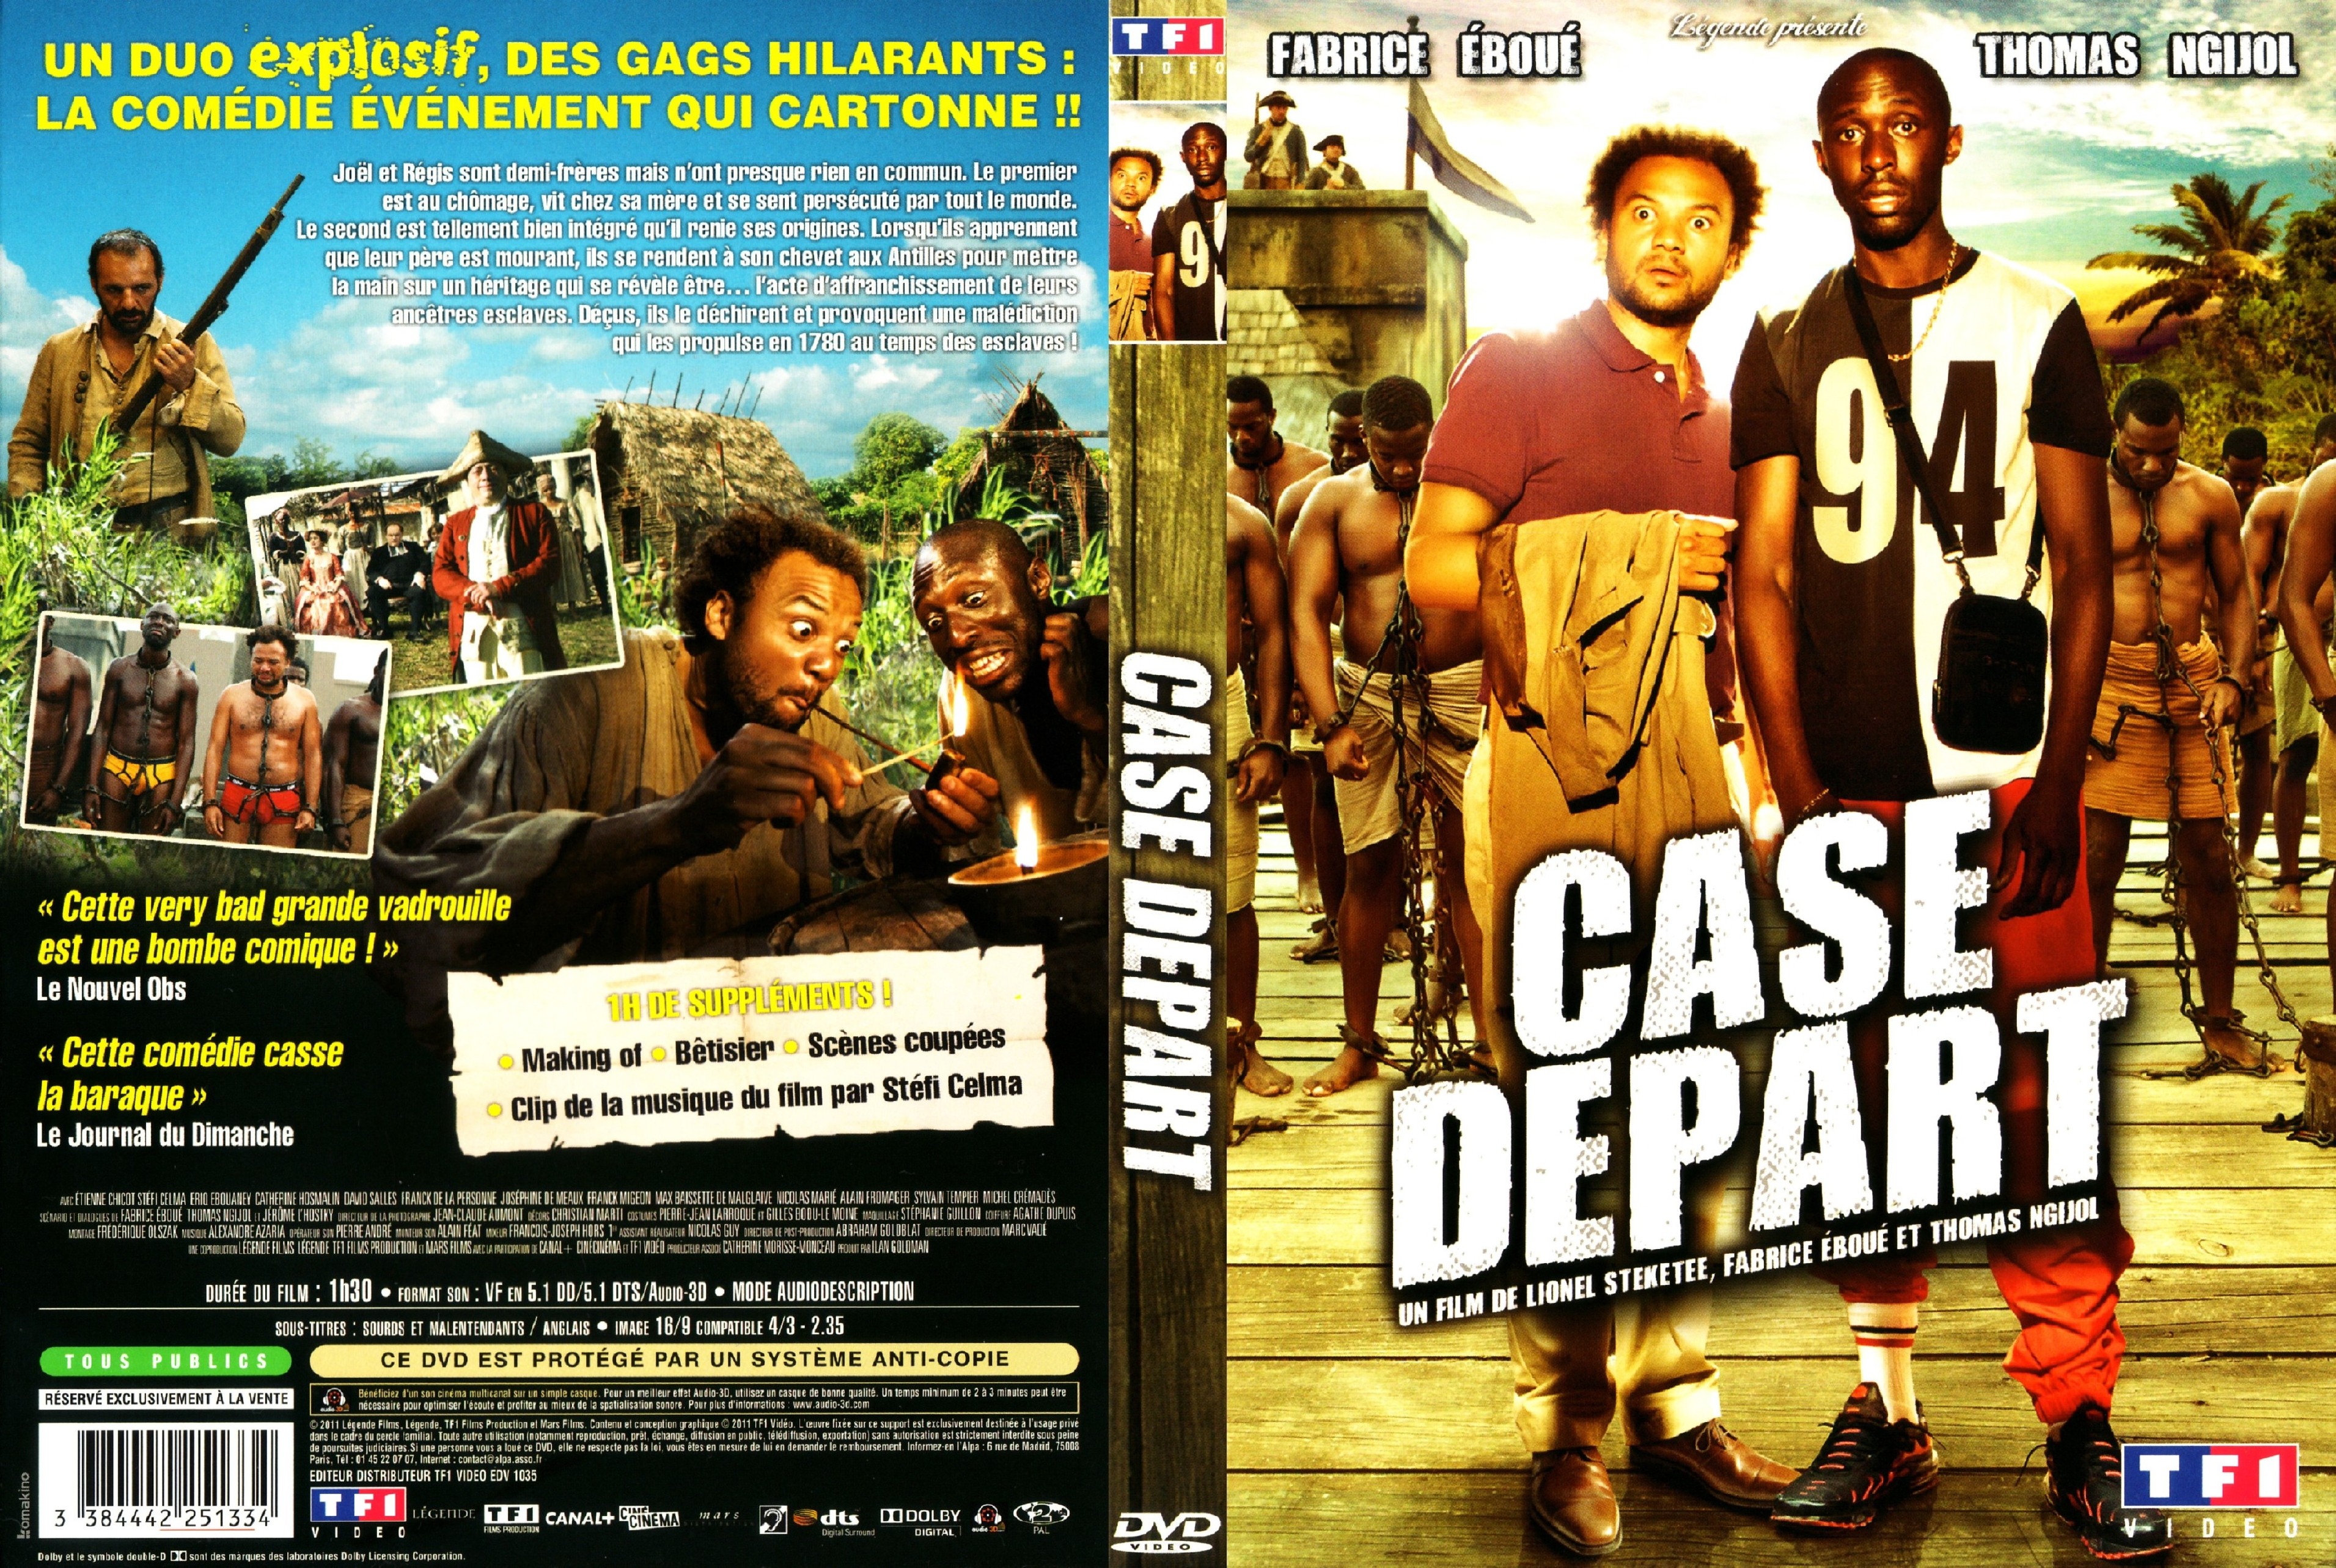 Jaquette DVD Case dpart v2